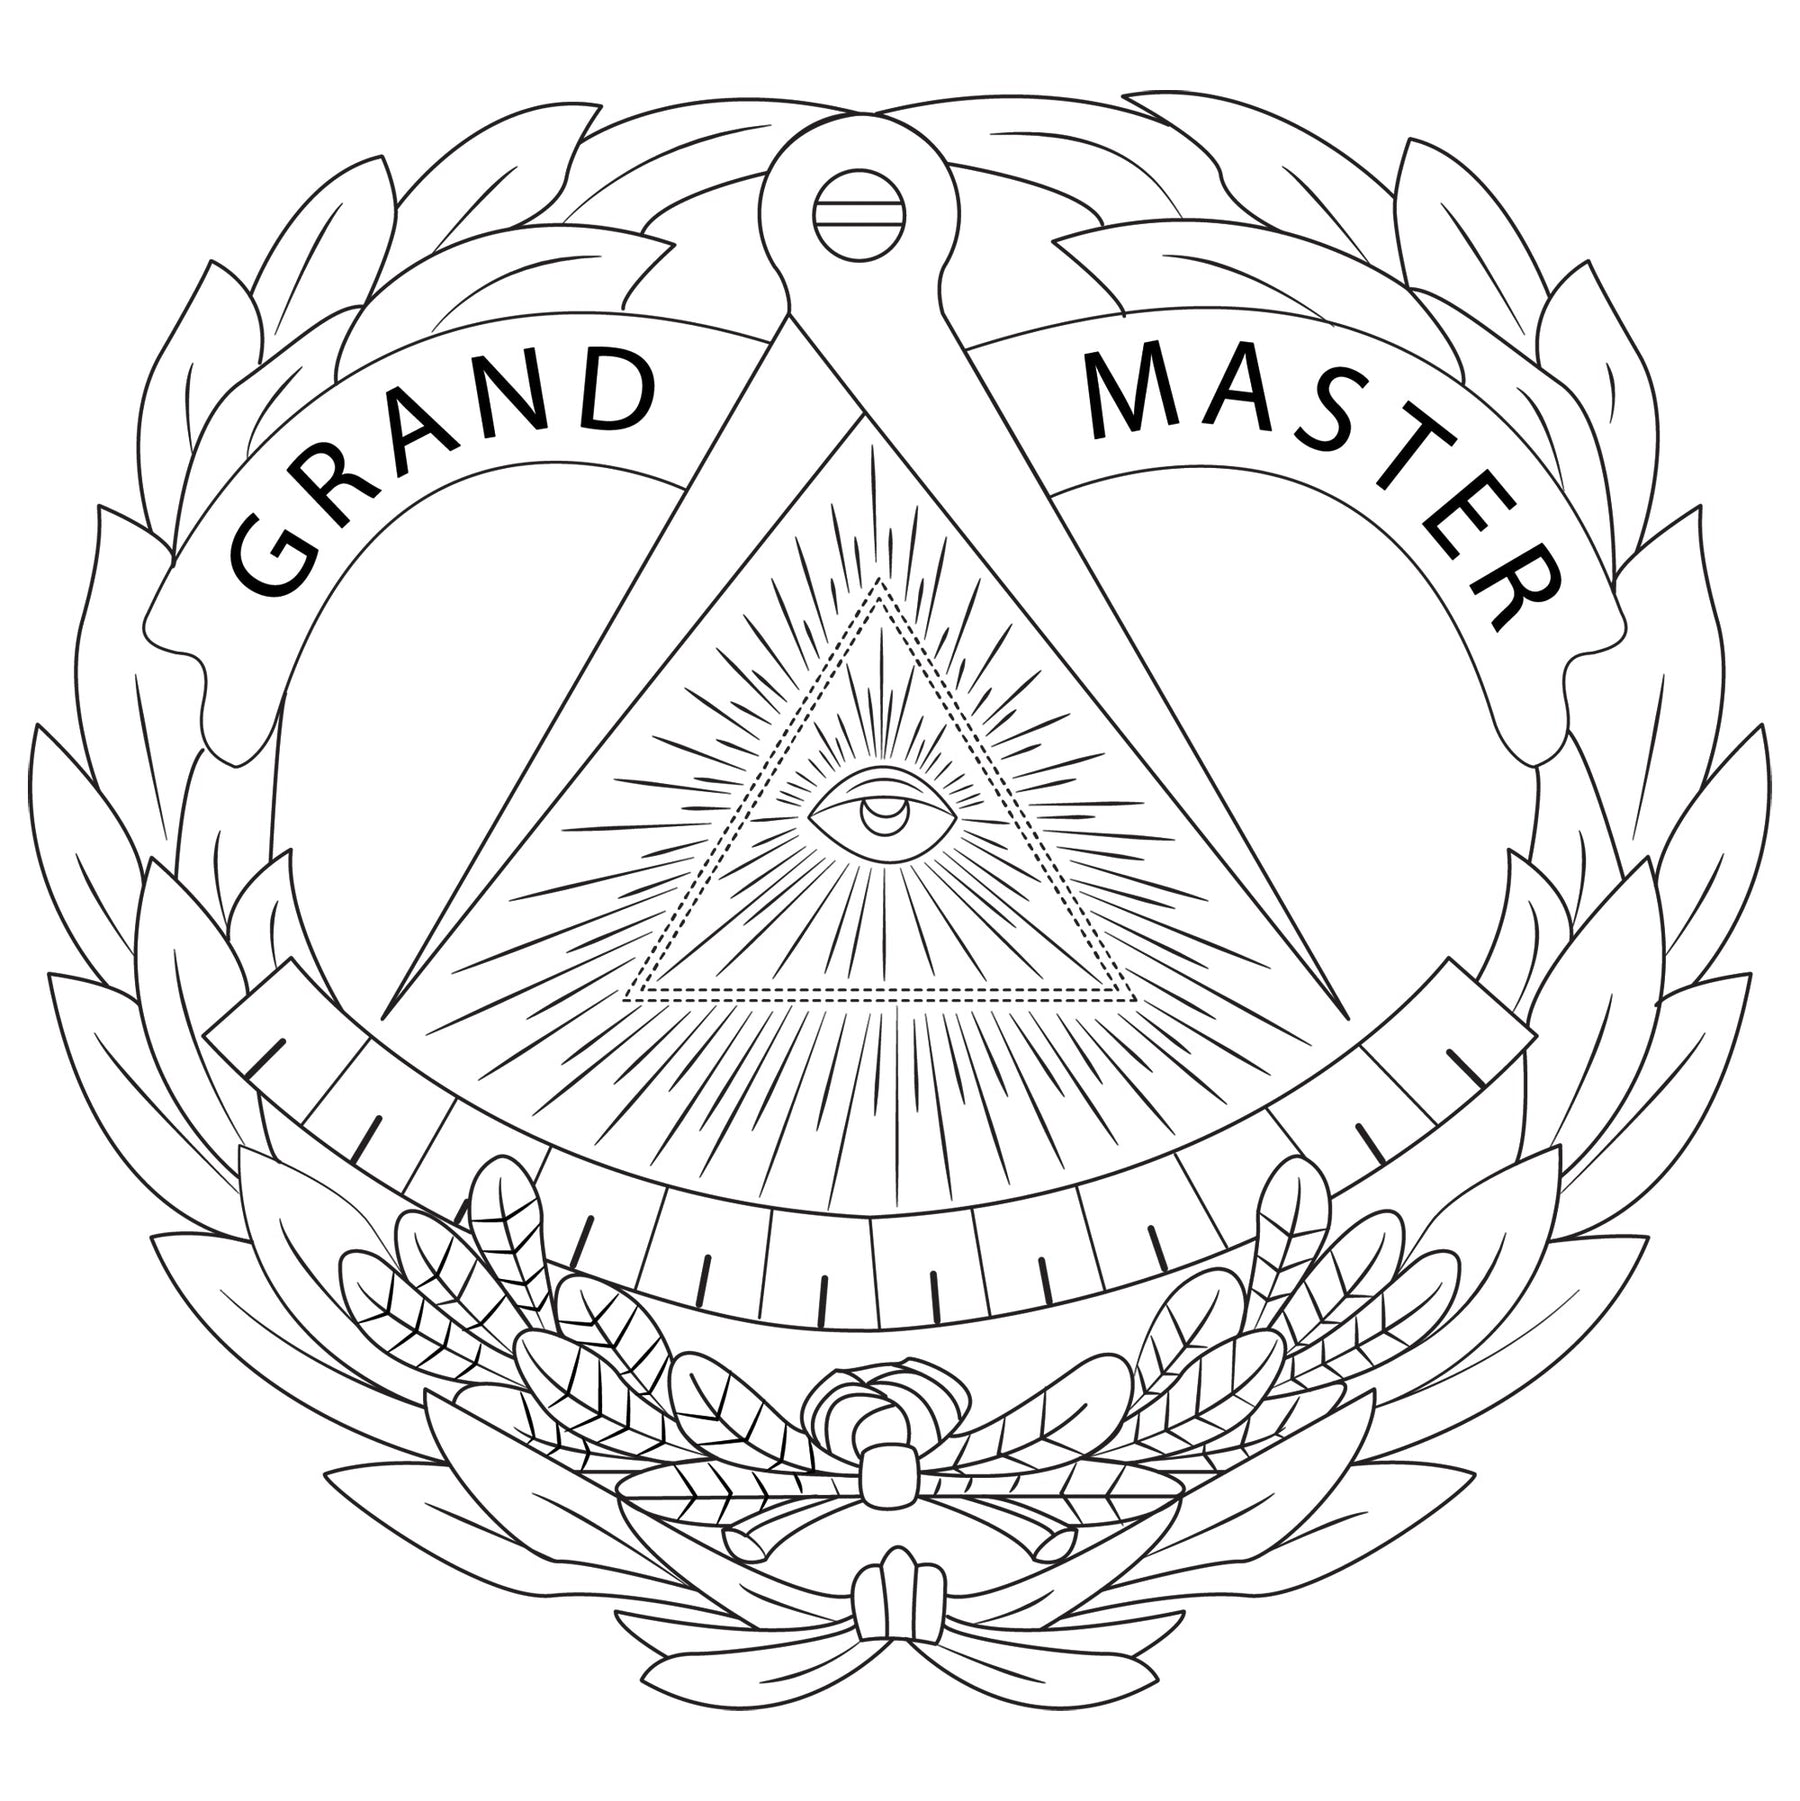 Grand Master Work Apron - Various Colors - Bricks Masons